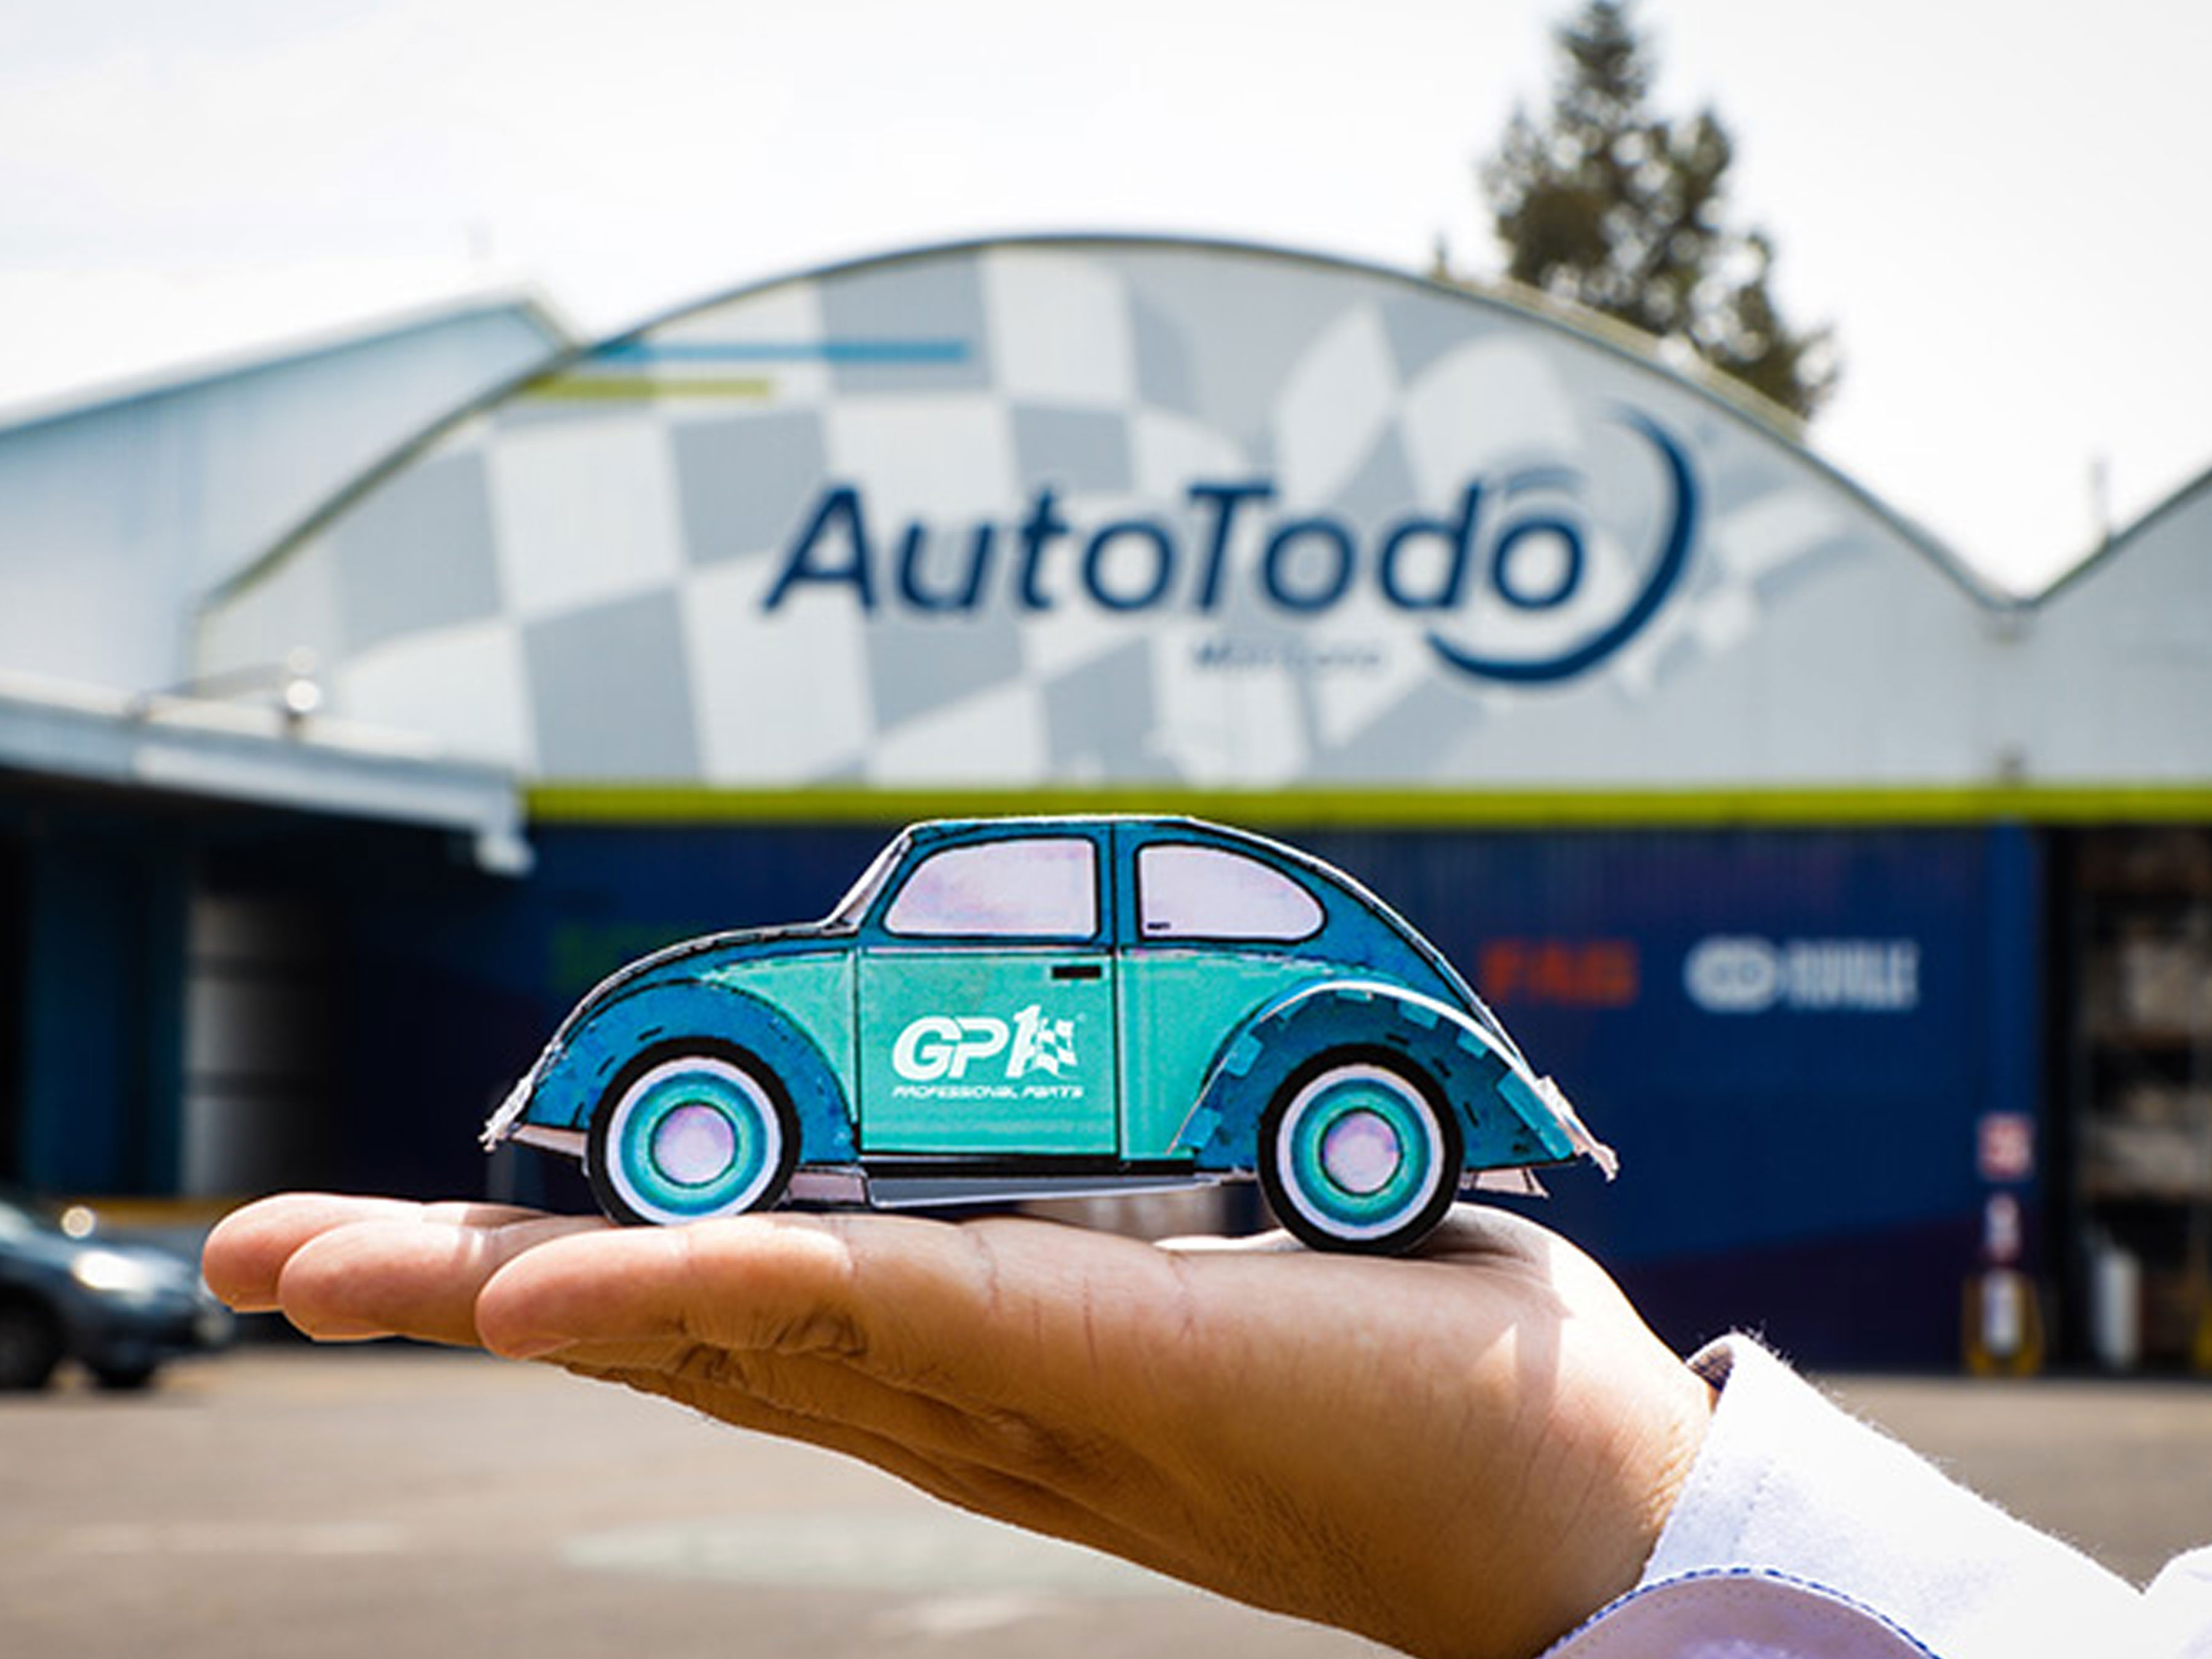 AutoTodo employee holding a car